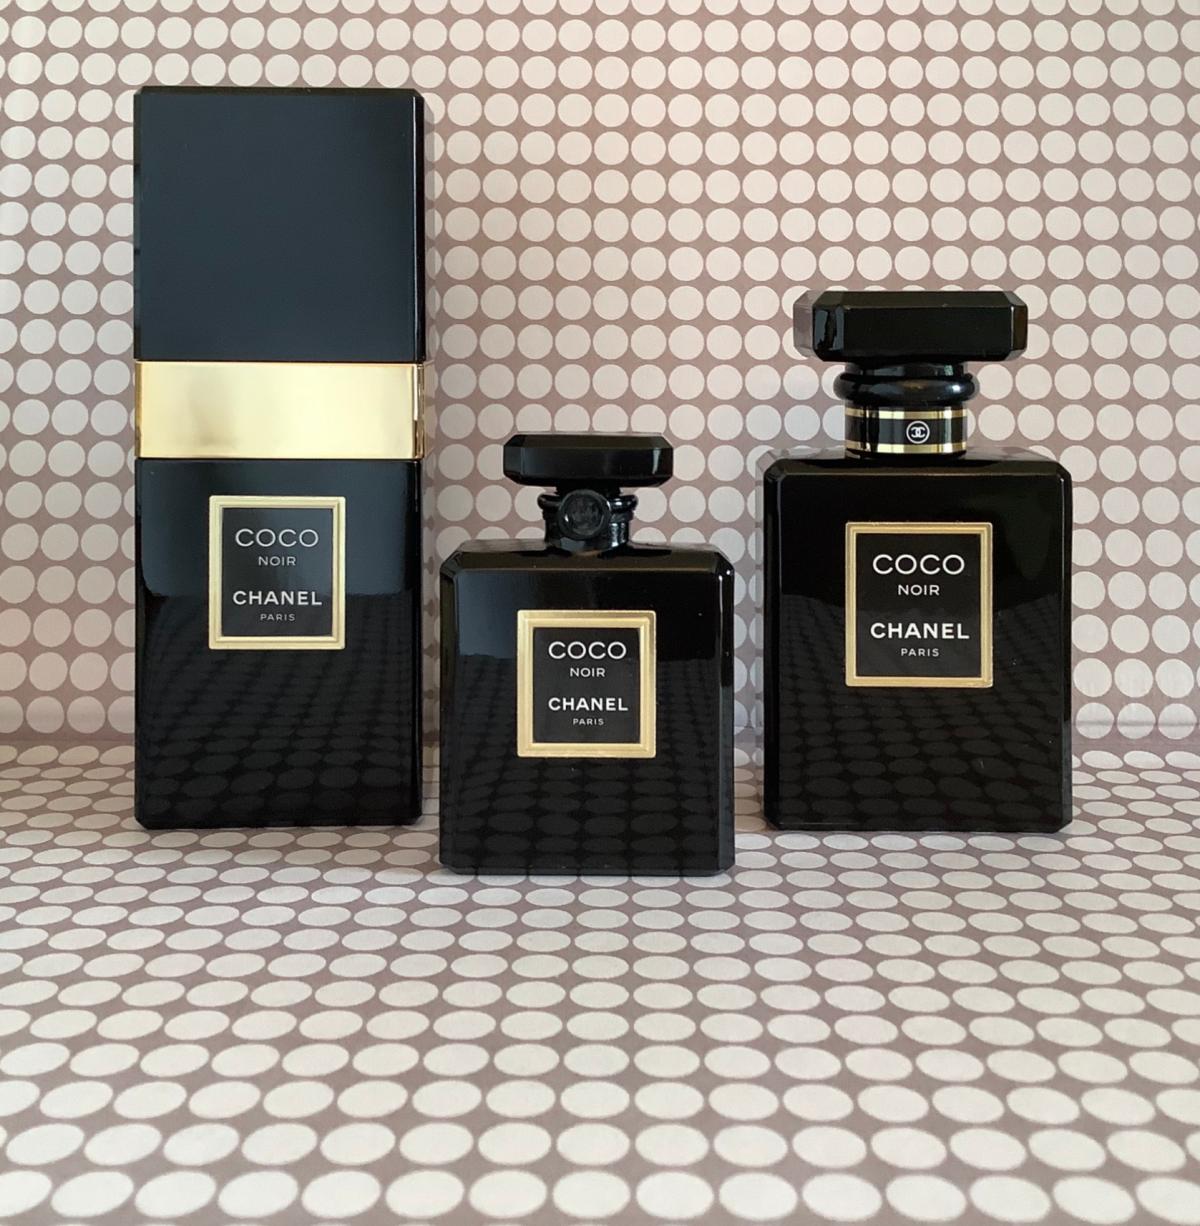 Coco Noir Extrait Chanel perfume - a fragrance for women 2014